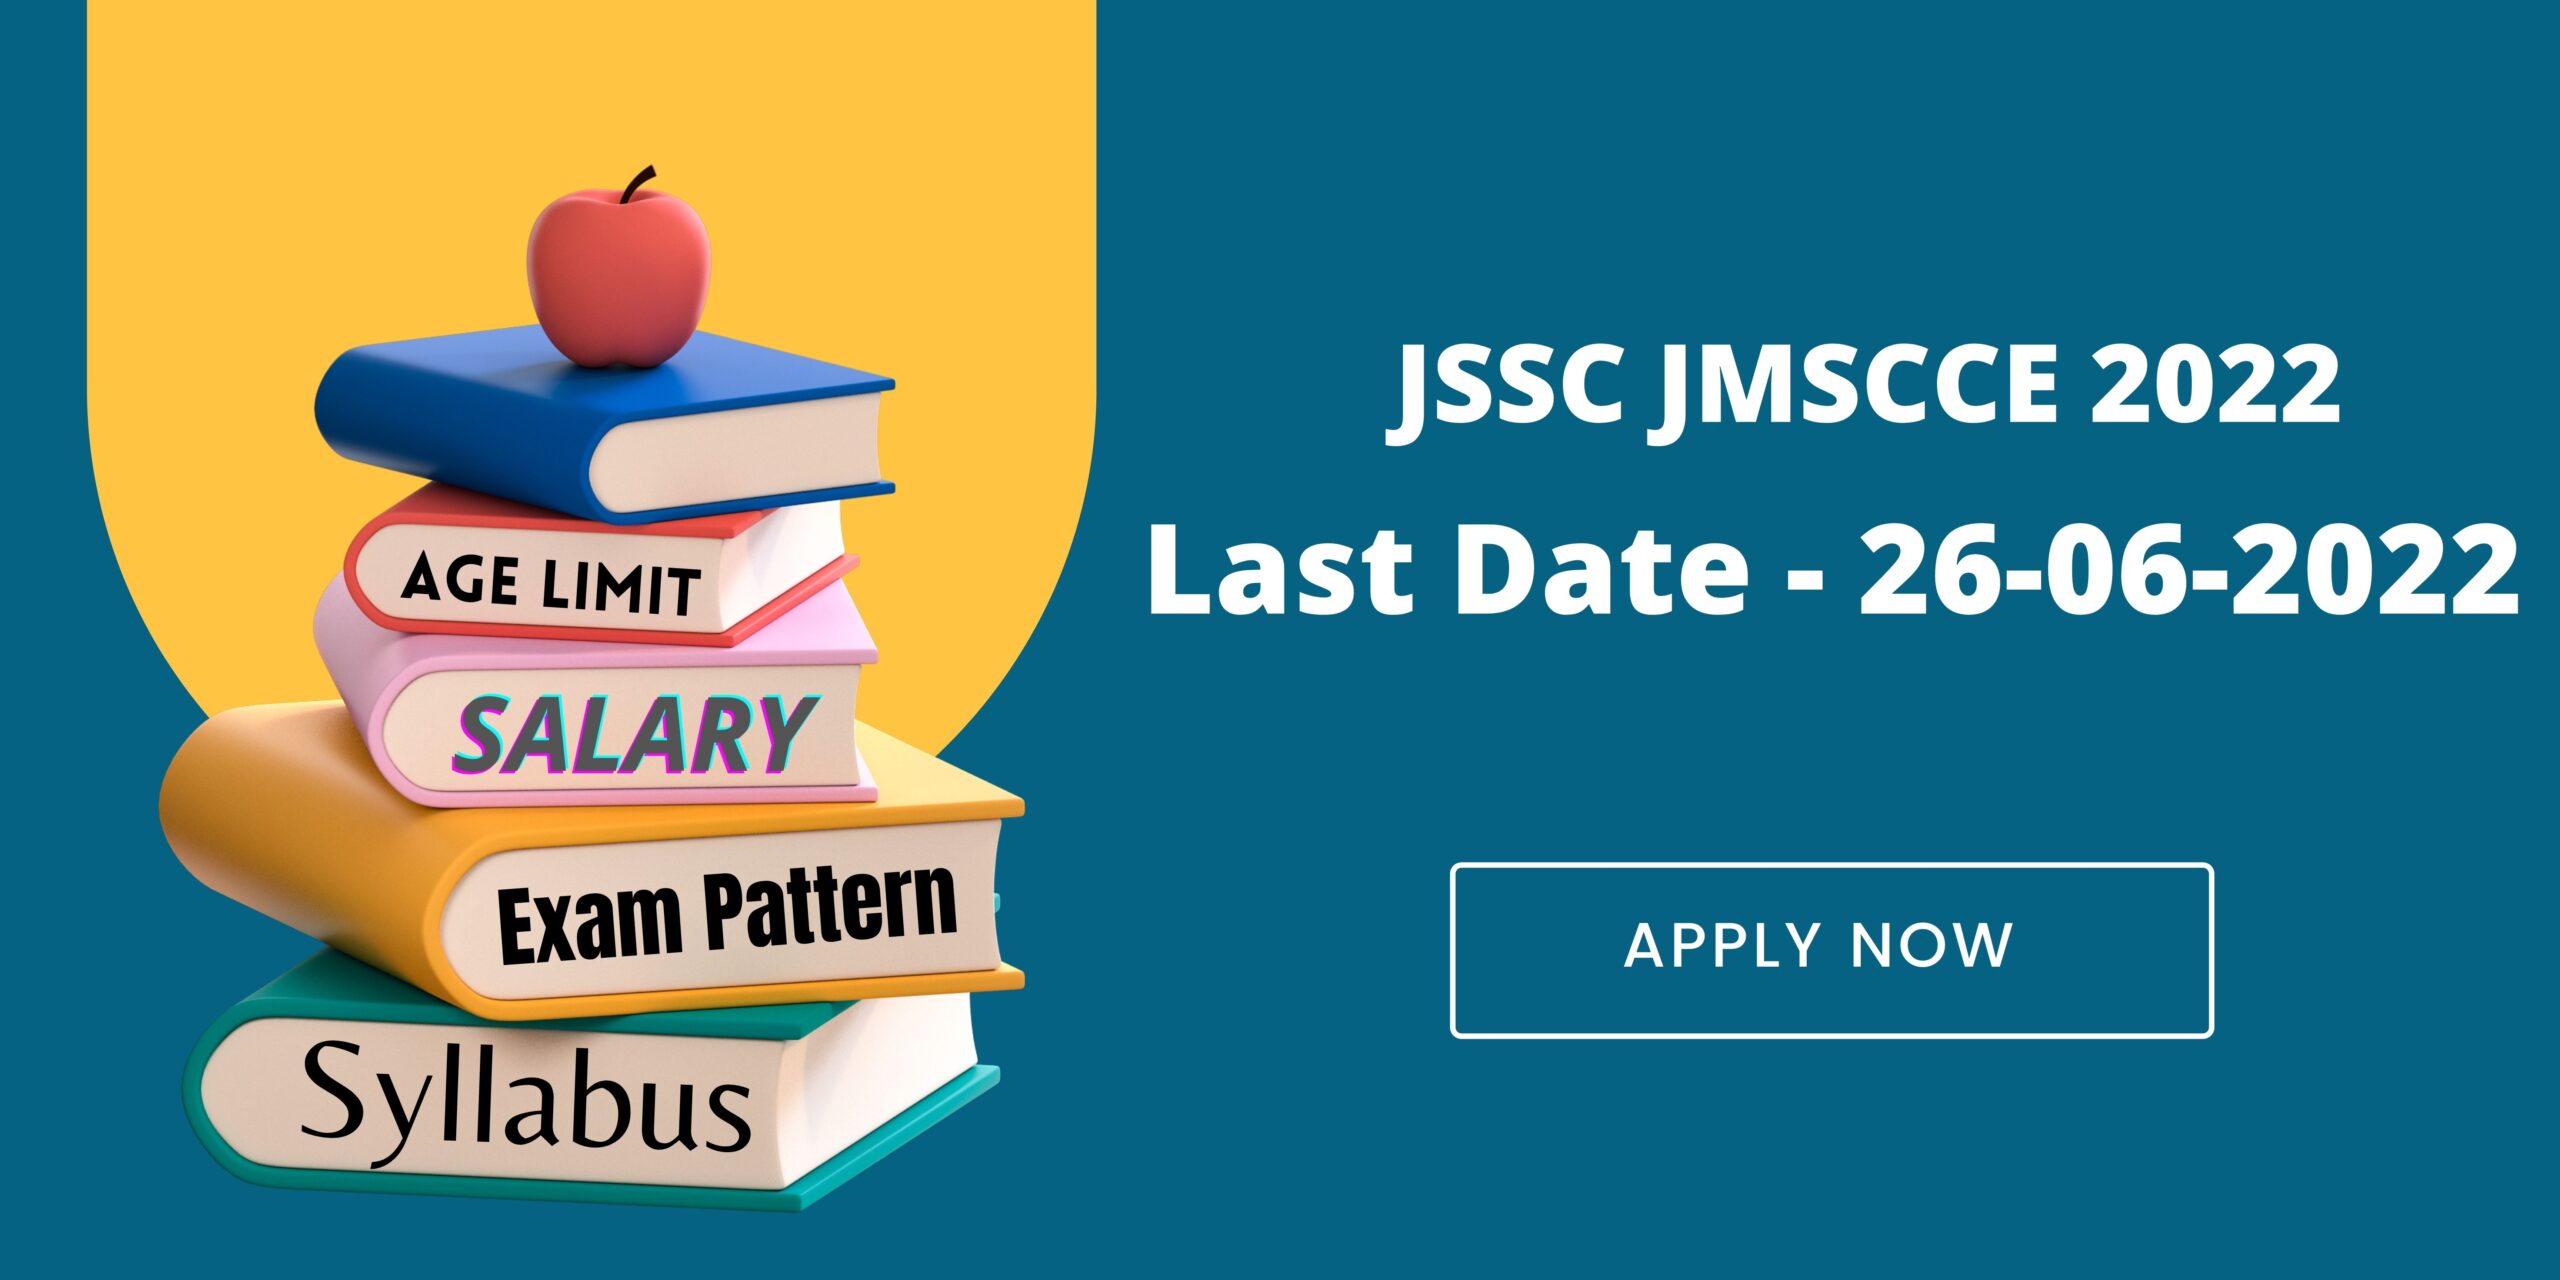 JSSC JMSCCE 2022